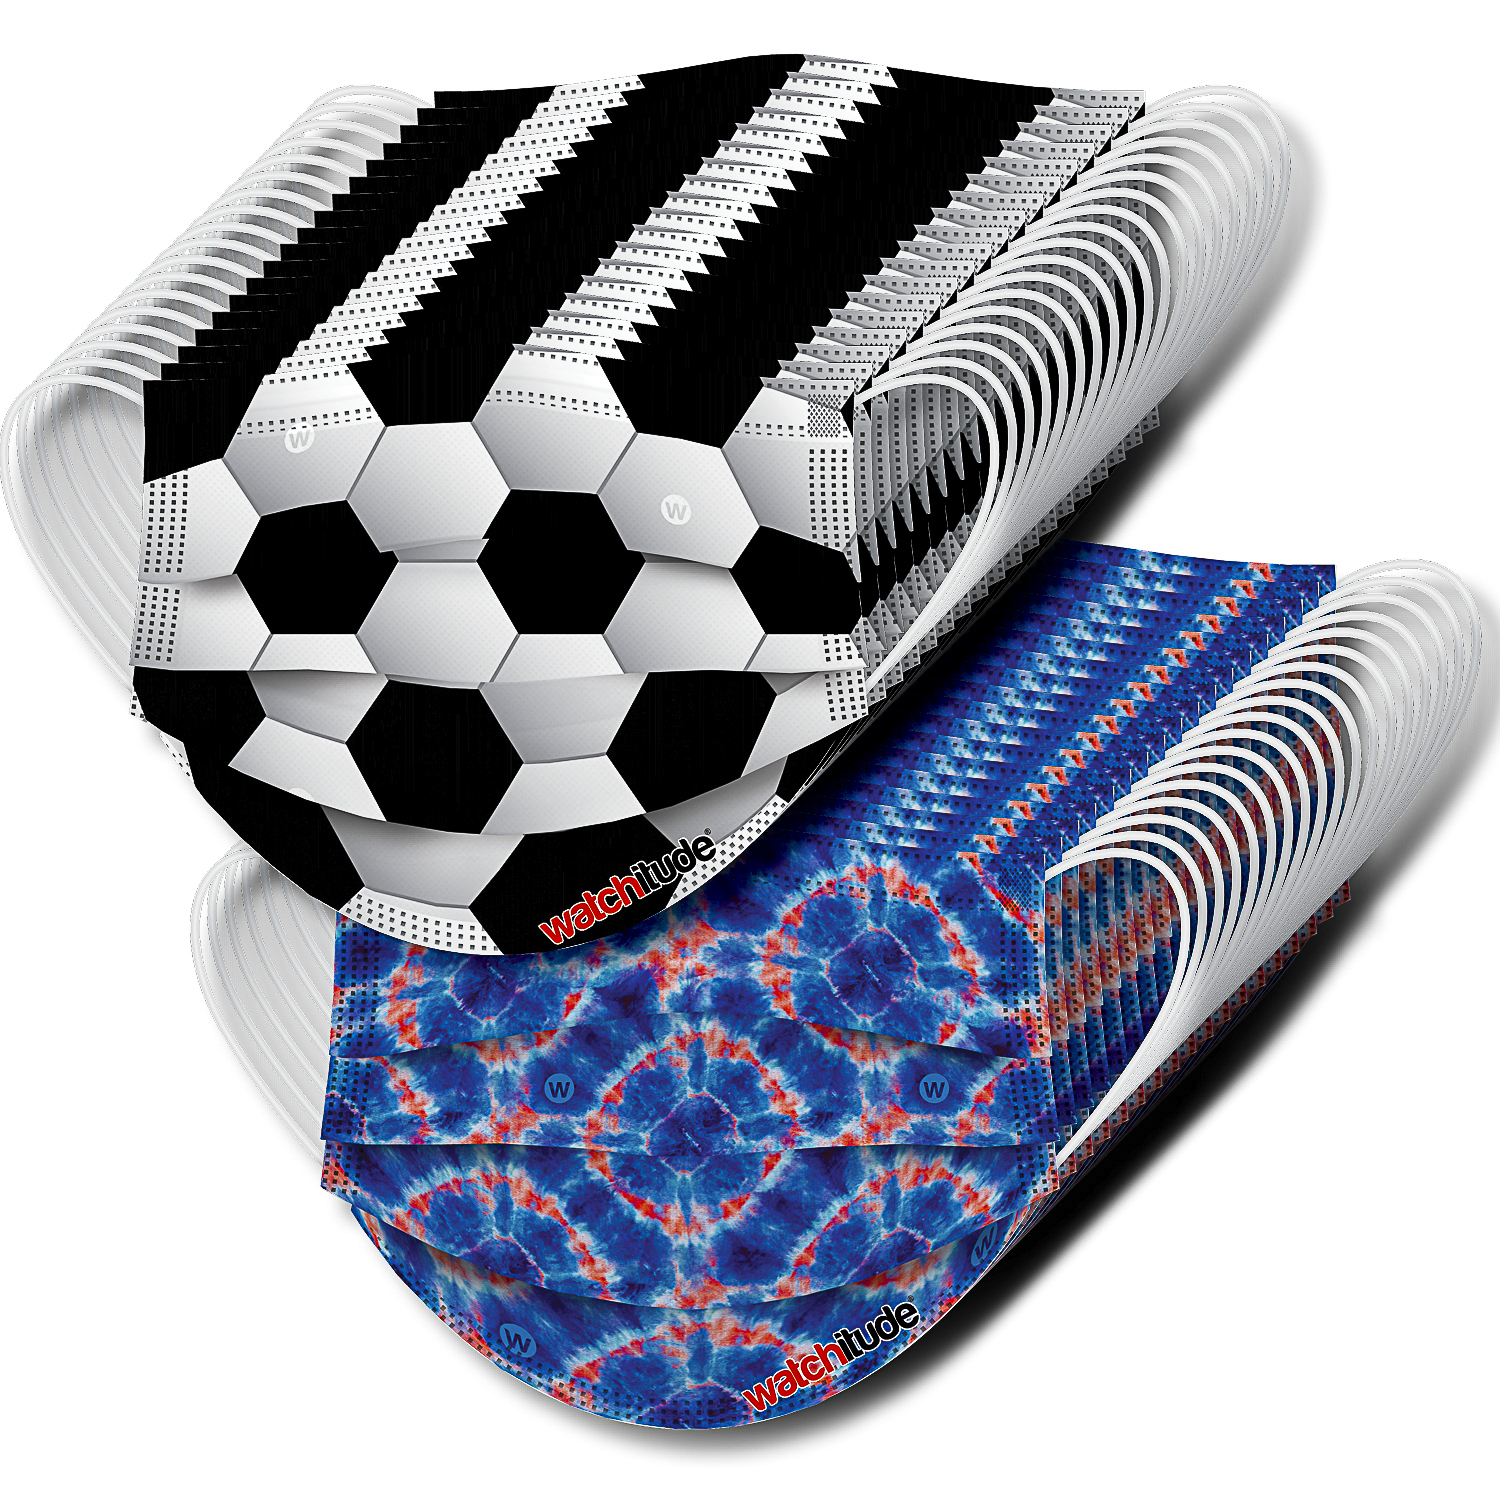 Soccer & Blue Tie Dye - Watchitude Kids Fun Masks (36-pack)